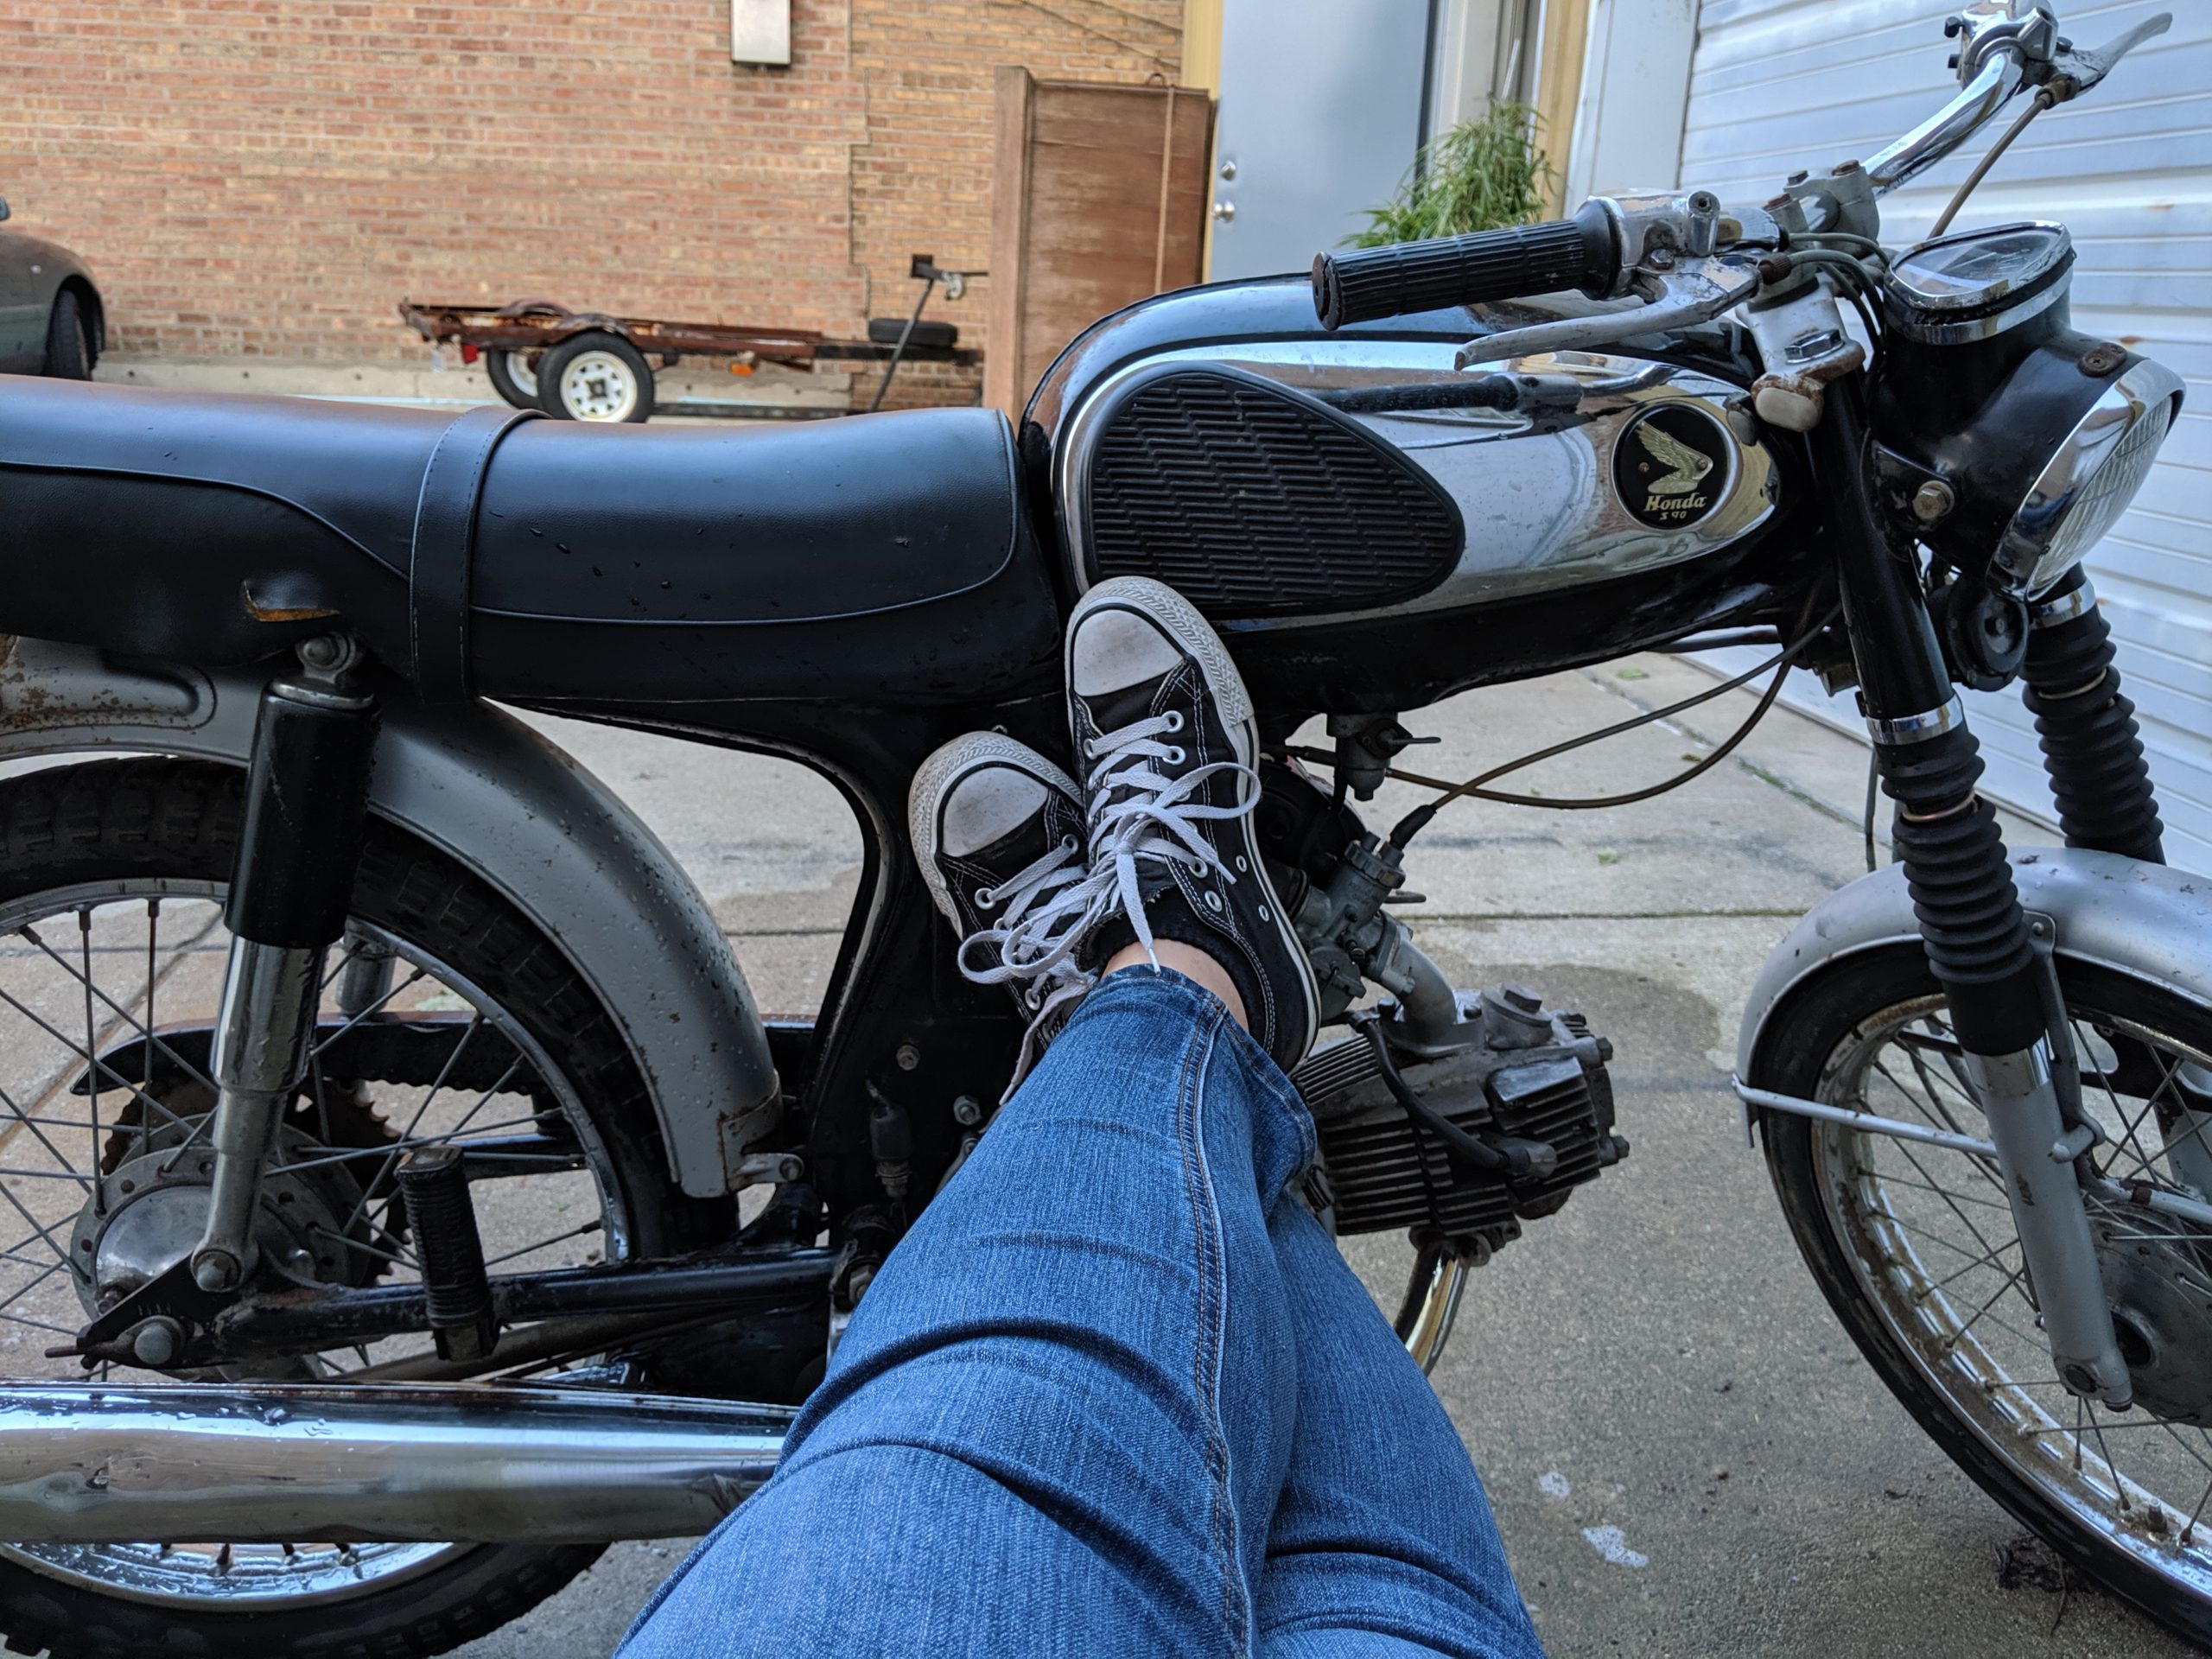 Blah blah blah, my first experiences with motorcycles.